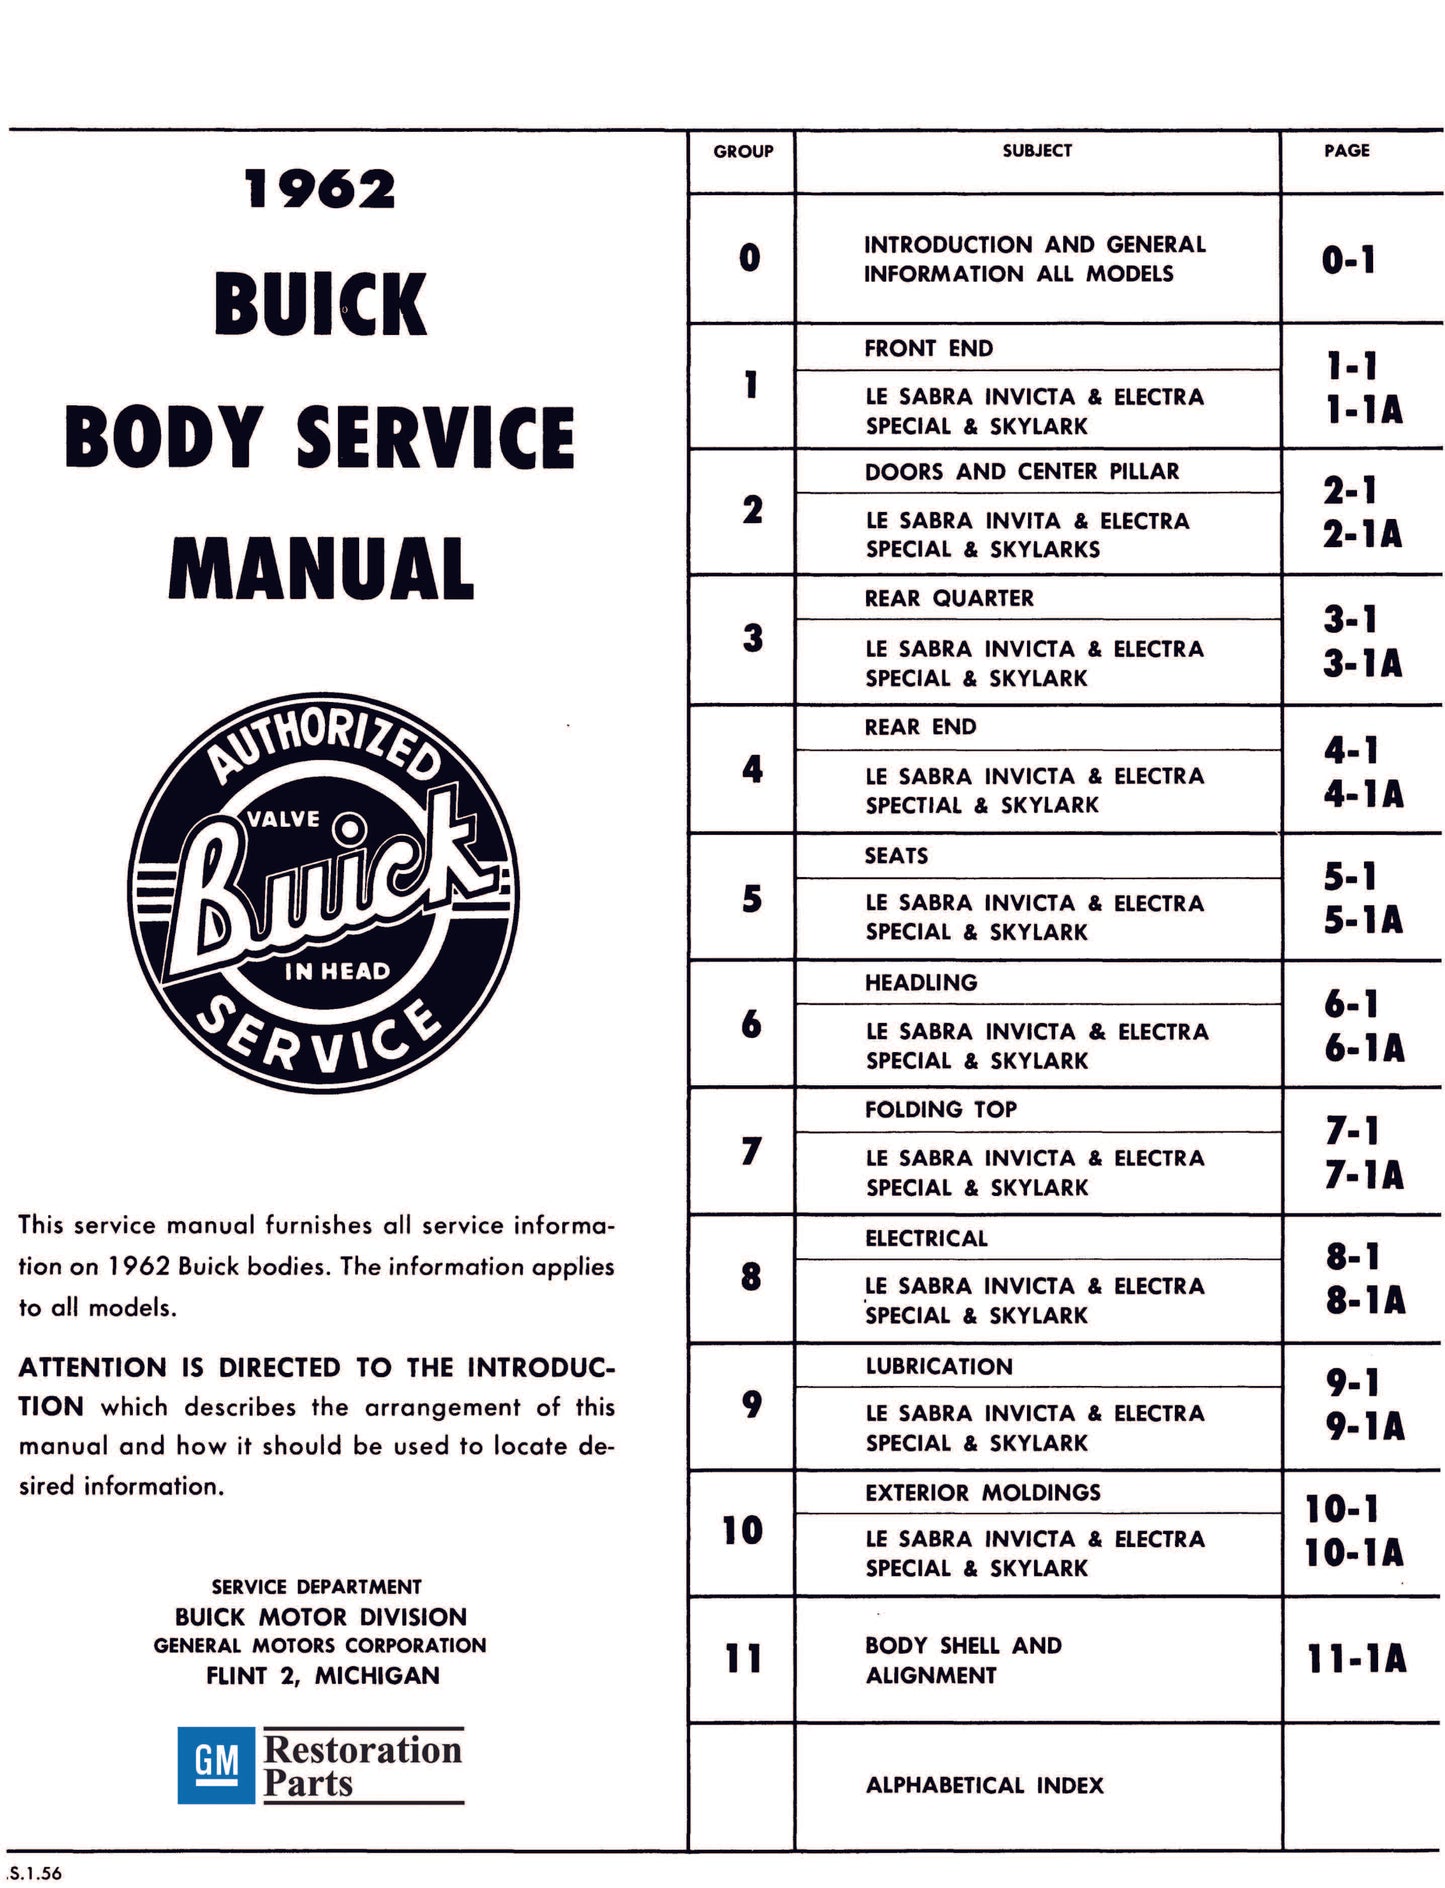 1962 Buick Repair Manuals - All Models